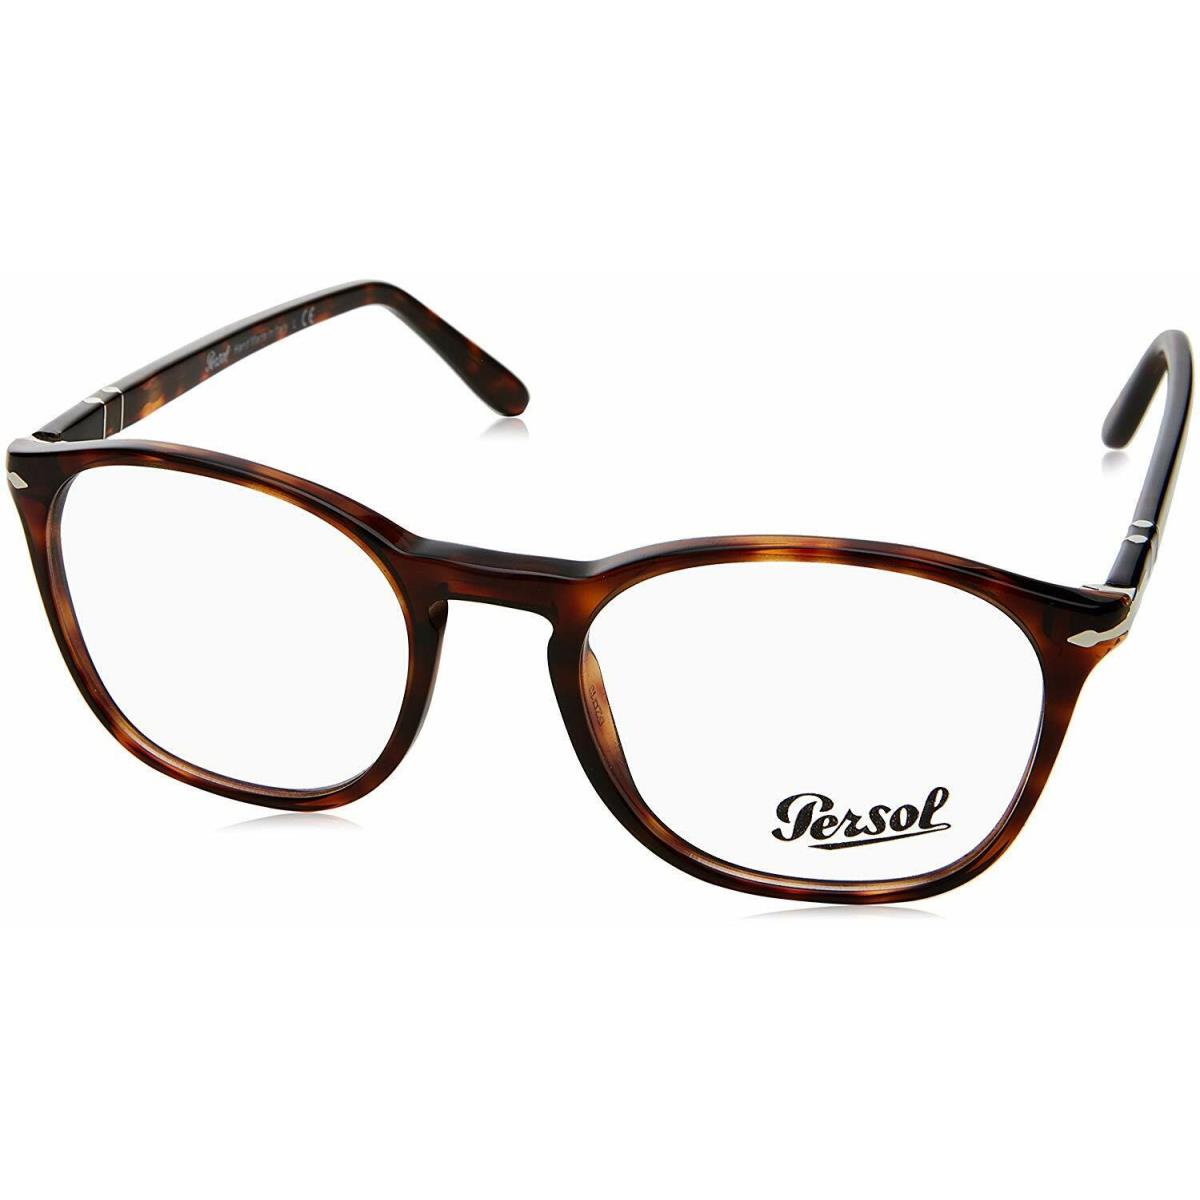 Persol Square Eyeglasses PO3007V 24 50mm Havana / Demo Lens - Havana Frame